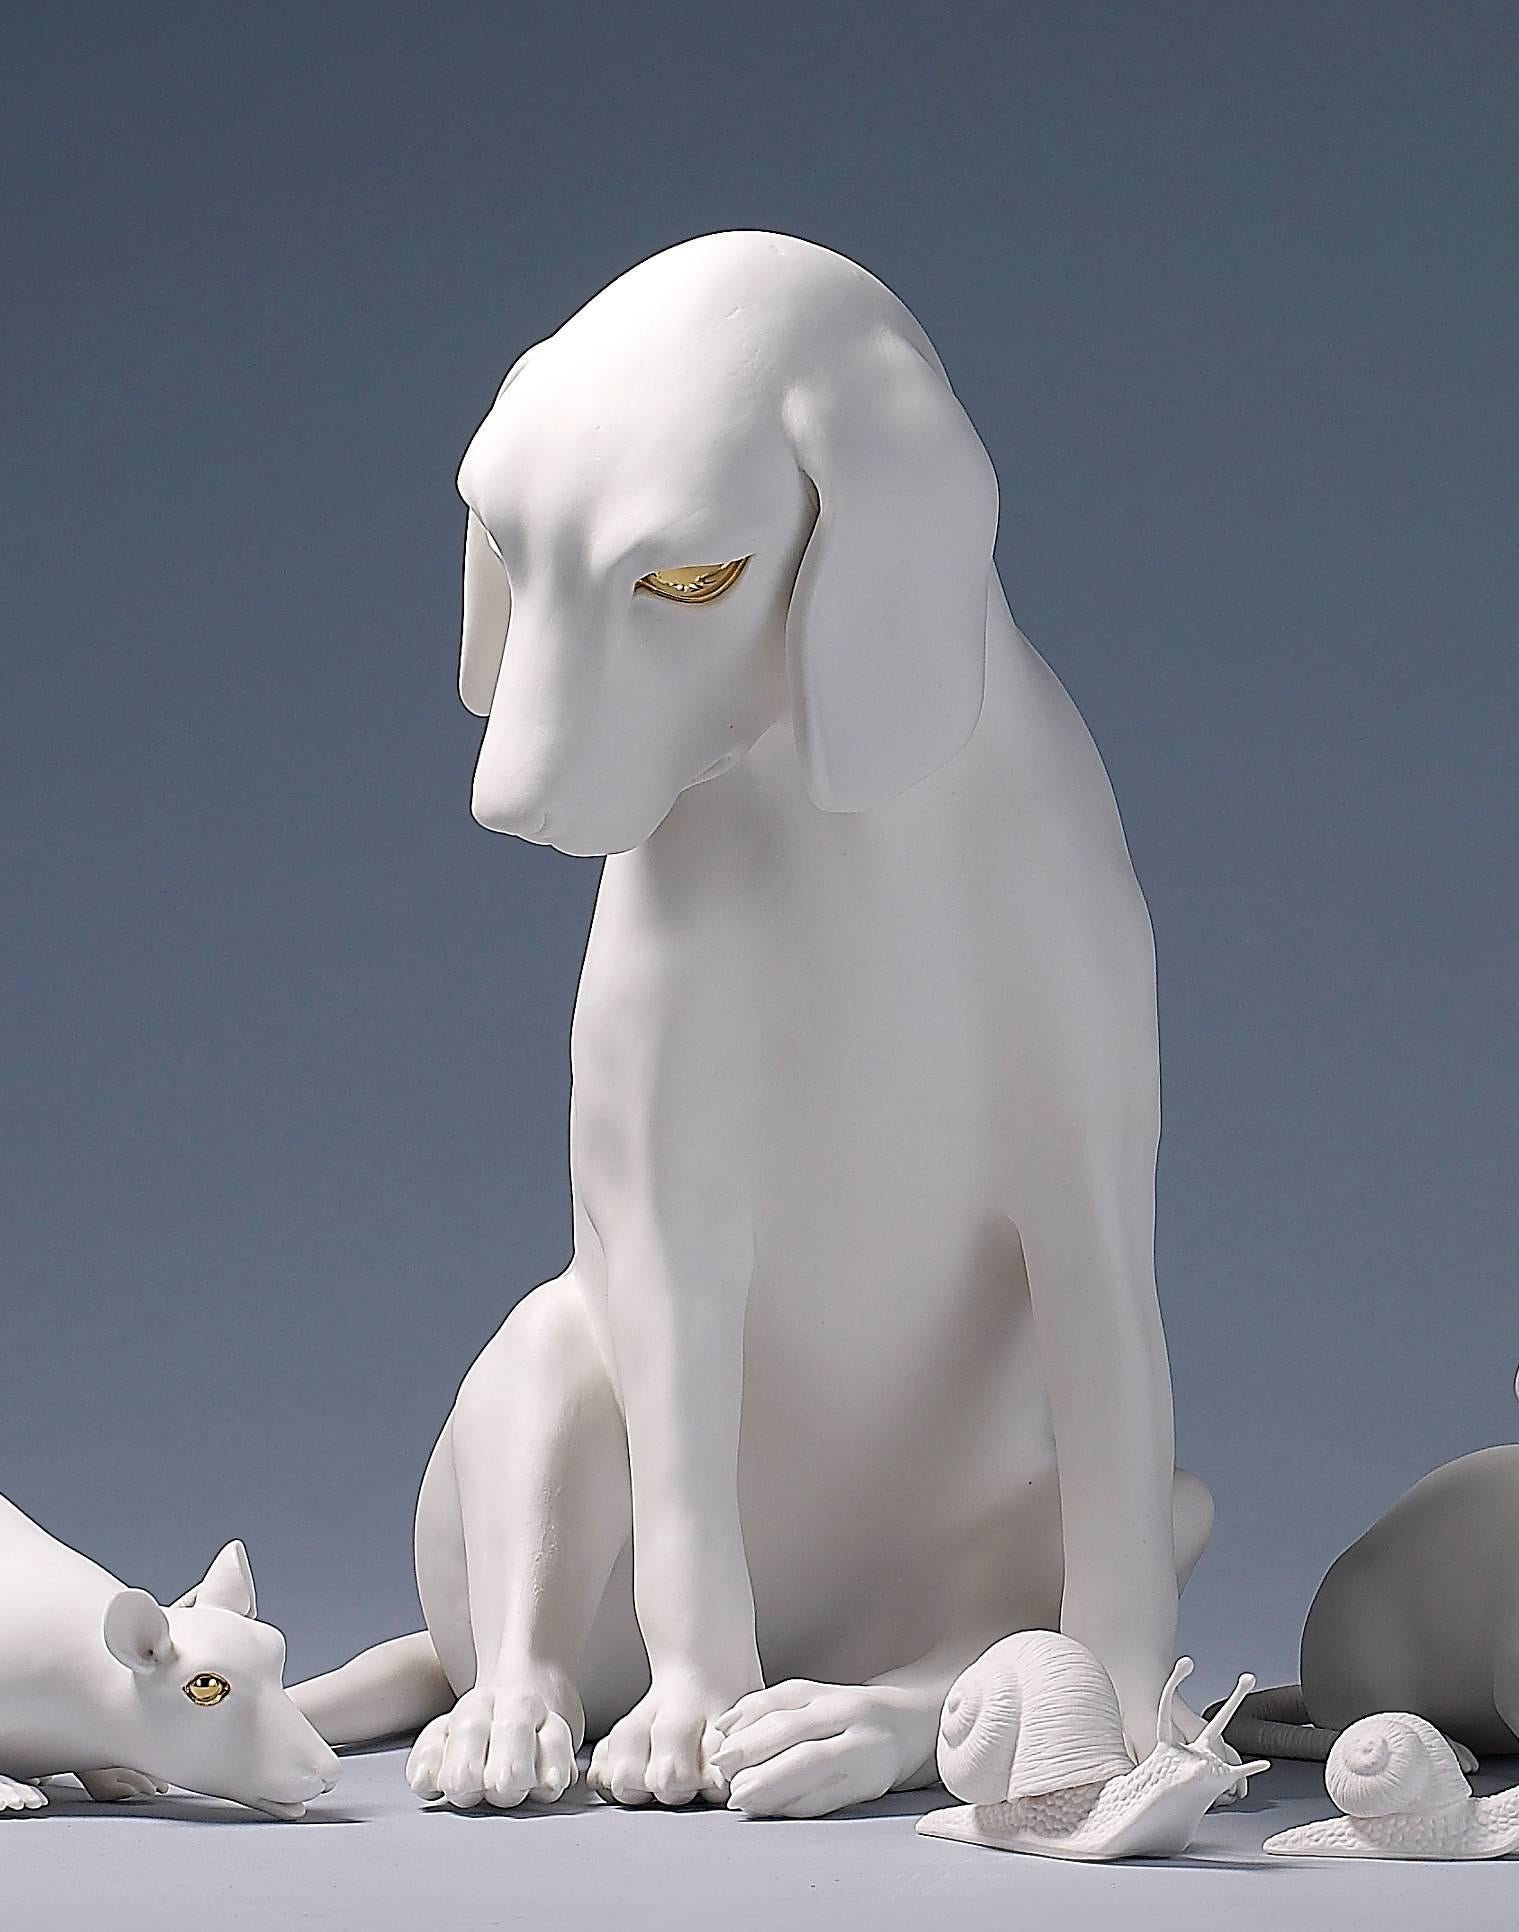 Wookjae Maeng Figurative Sculpture - The Imperceptible-Dog 